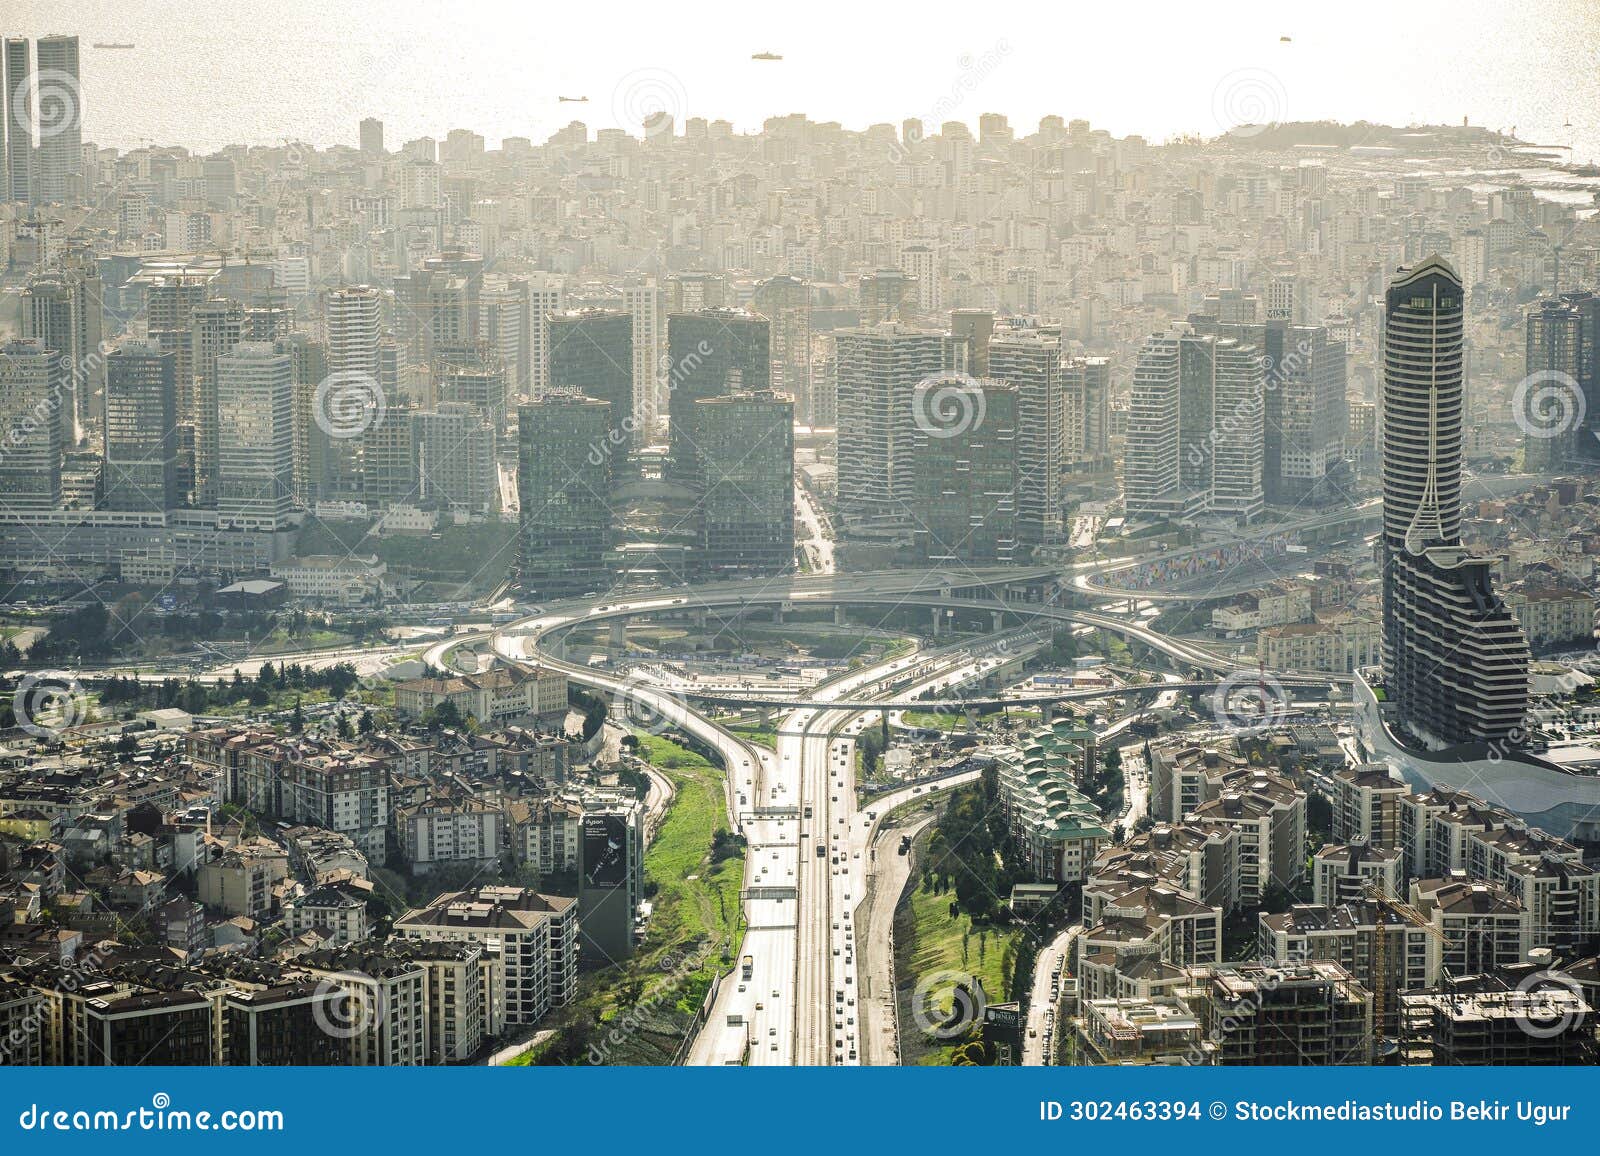 istanbul, turkey - december 23, 2023: aerial drone view kadikoy, fikirtepe, uzuncayir. ac?badem